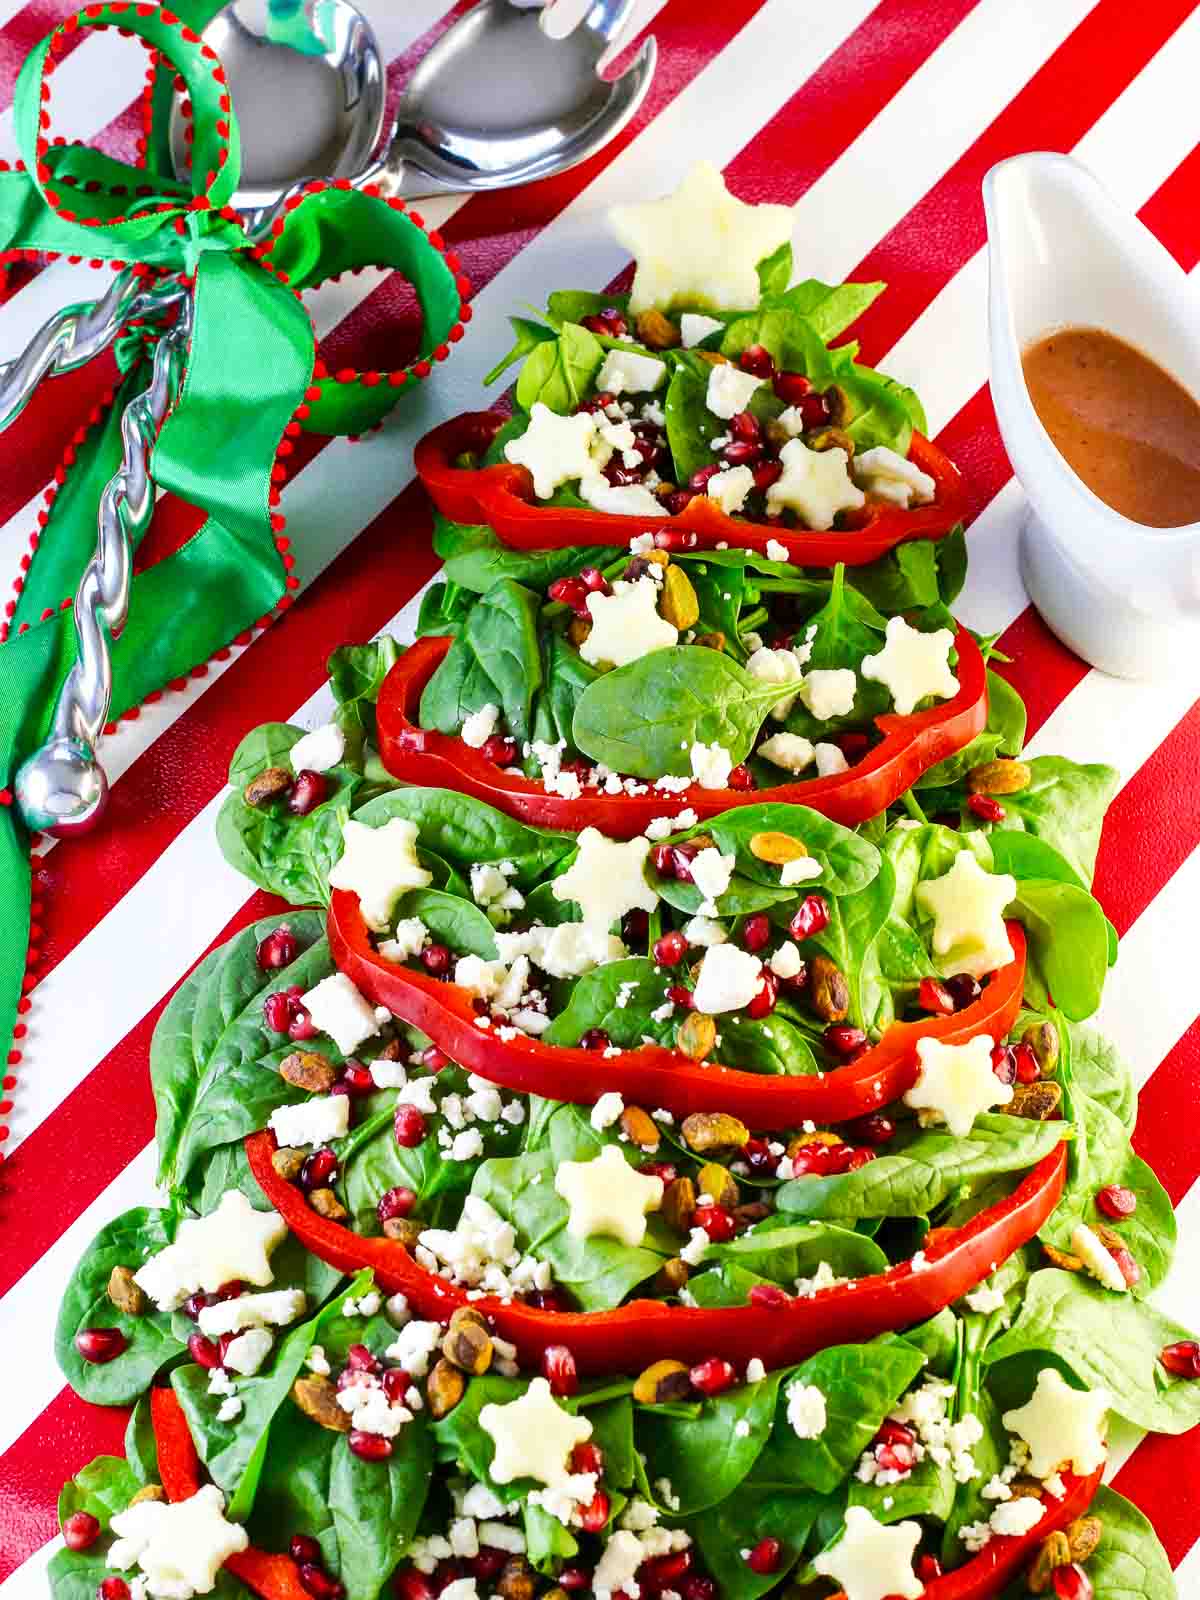 Salad-inspired Christmas gifts